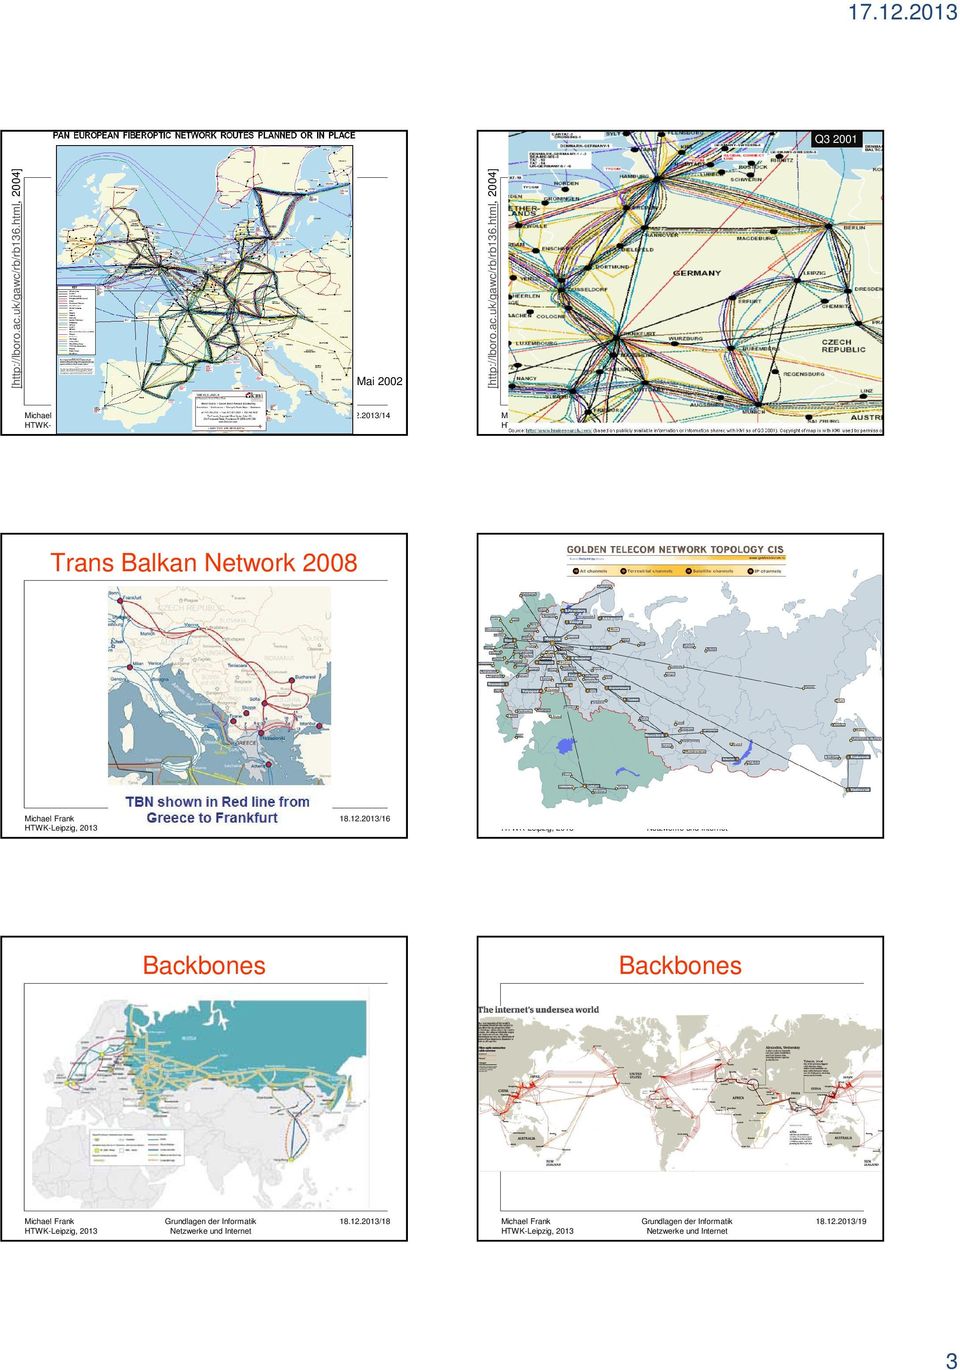 2001 18.12.2013/14 09.12.2008/15 Trans Balkan Network 2008 18.